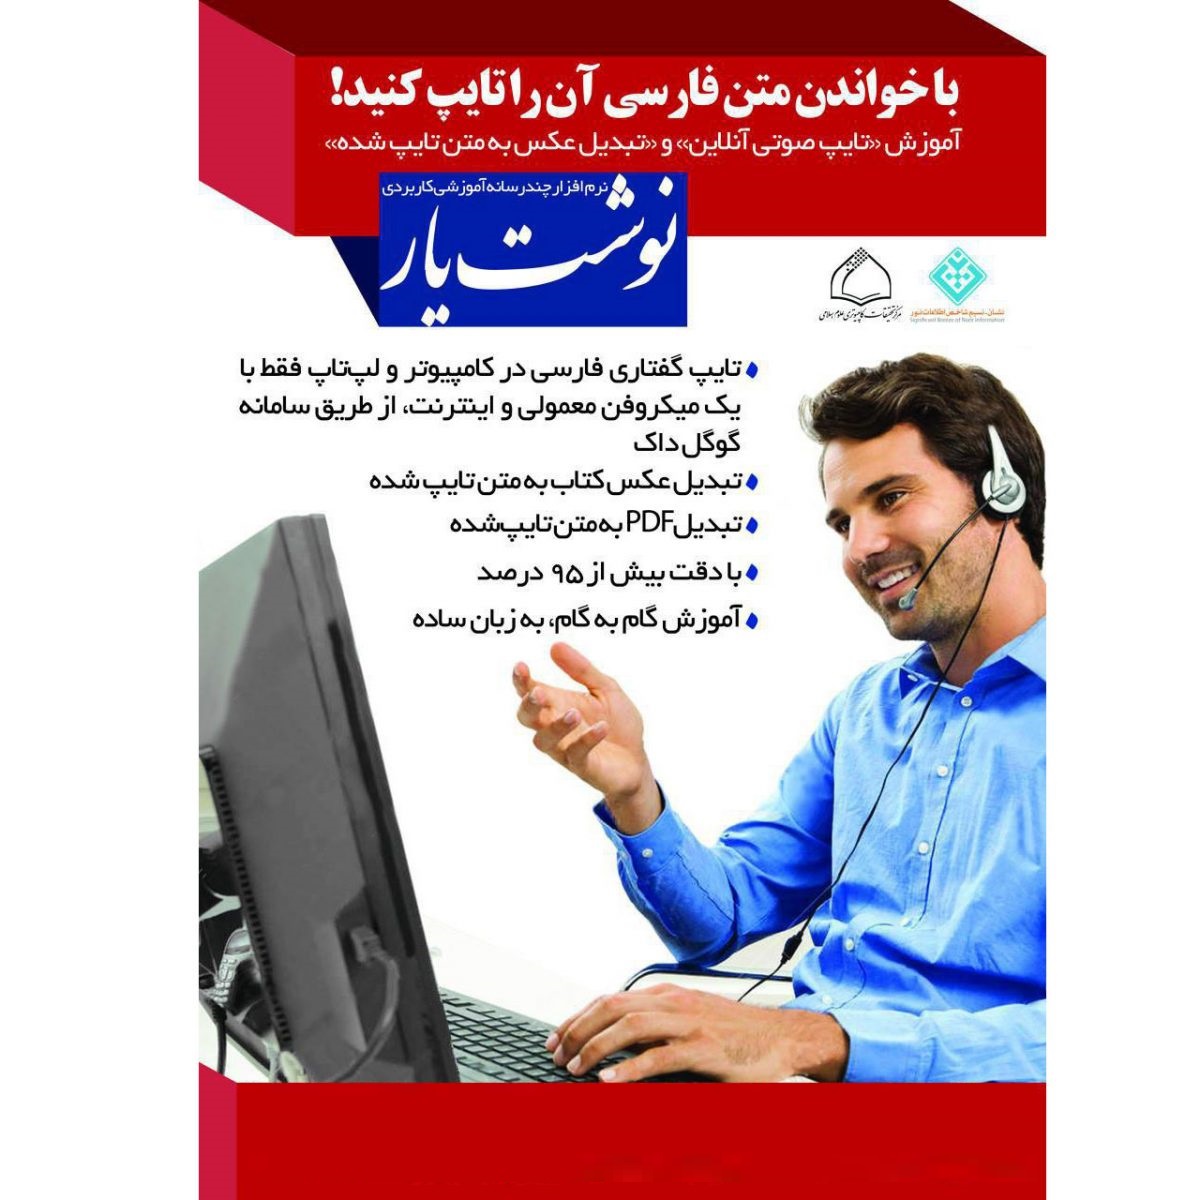 نرم افزار آموزشی نوشت یار نشر مرکز تحقیقات کامپیوتری علوم اسلامی